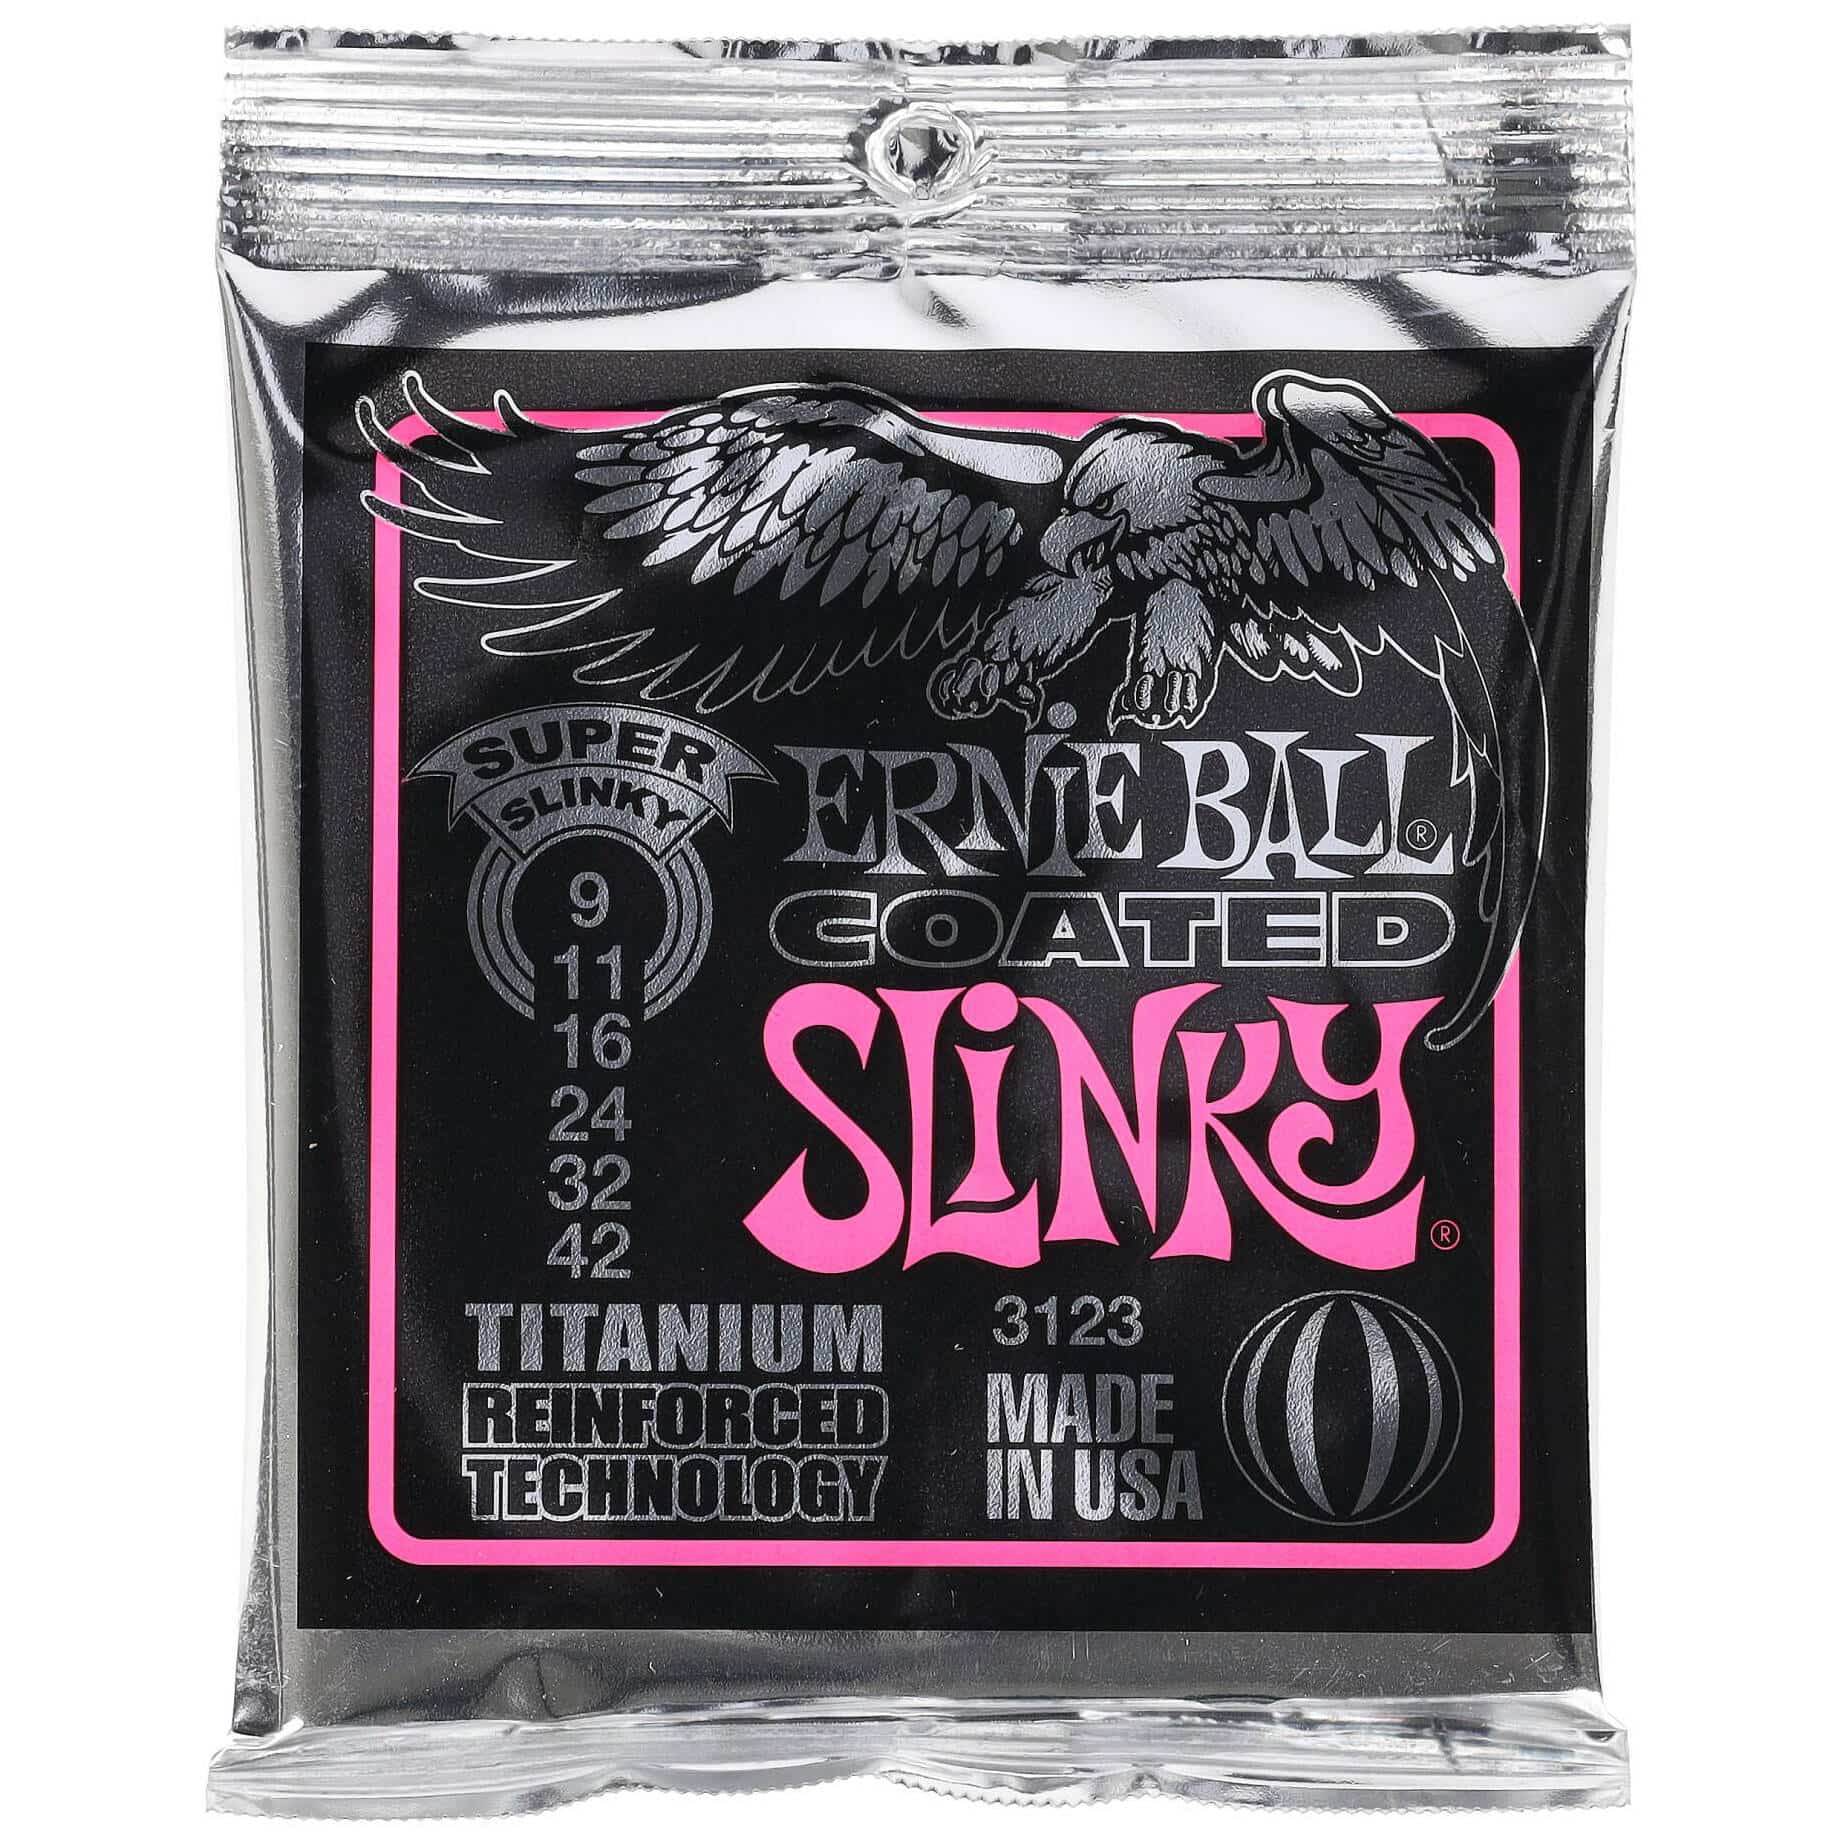 Ernie Ball 3123 - Super Slinky | 009-042